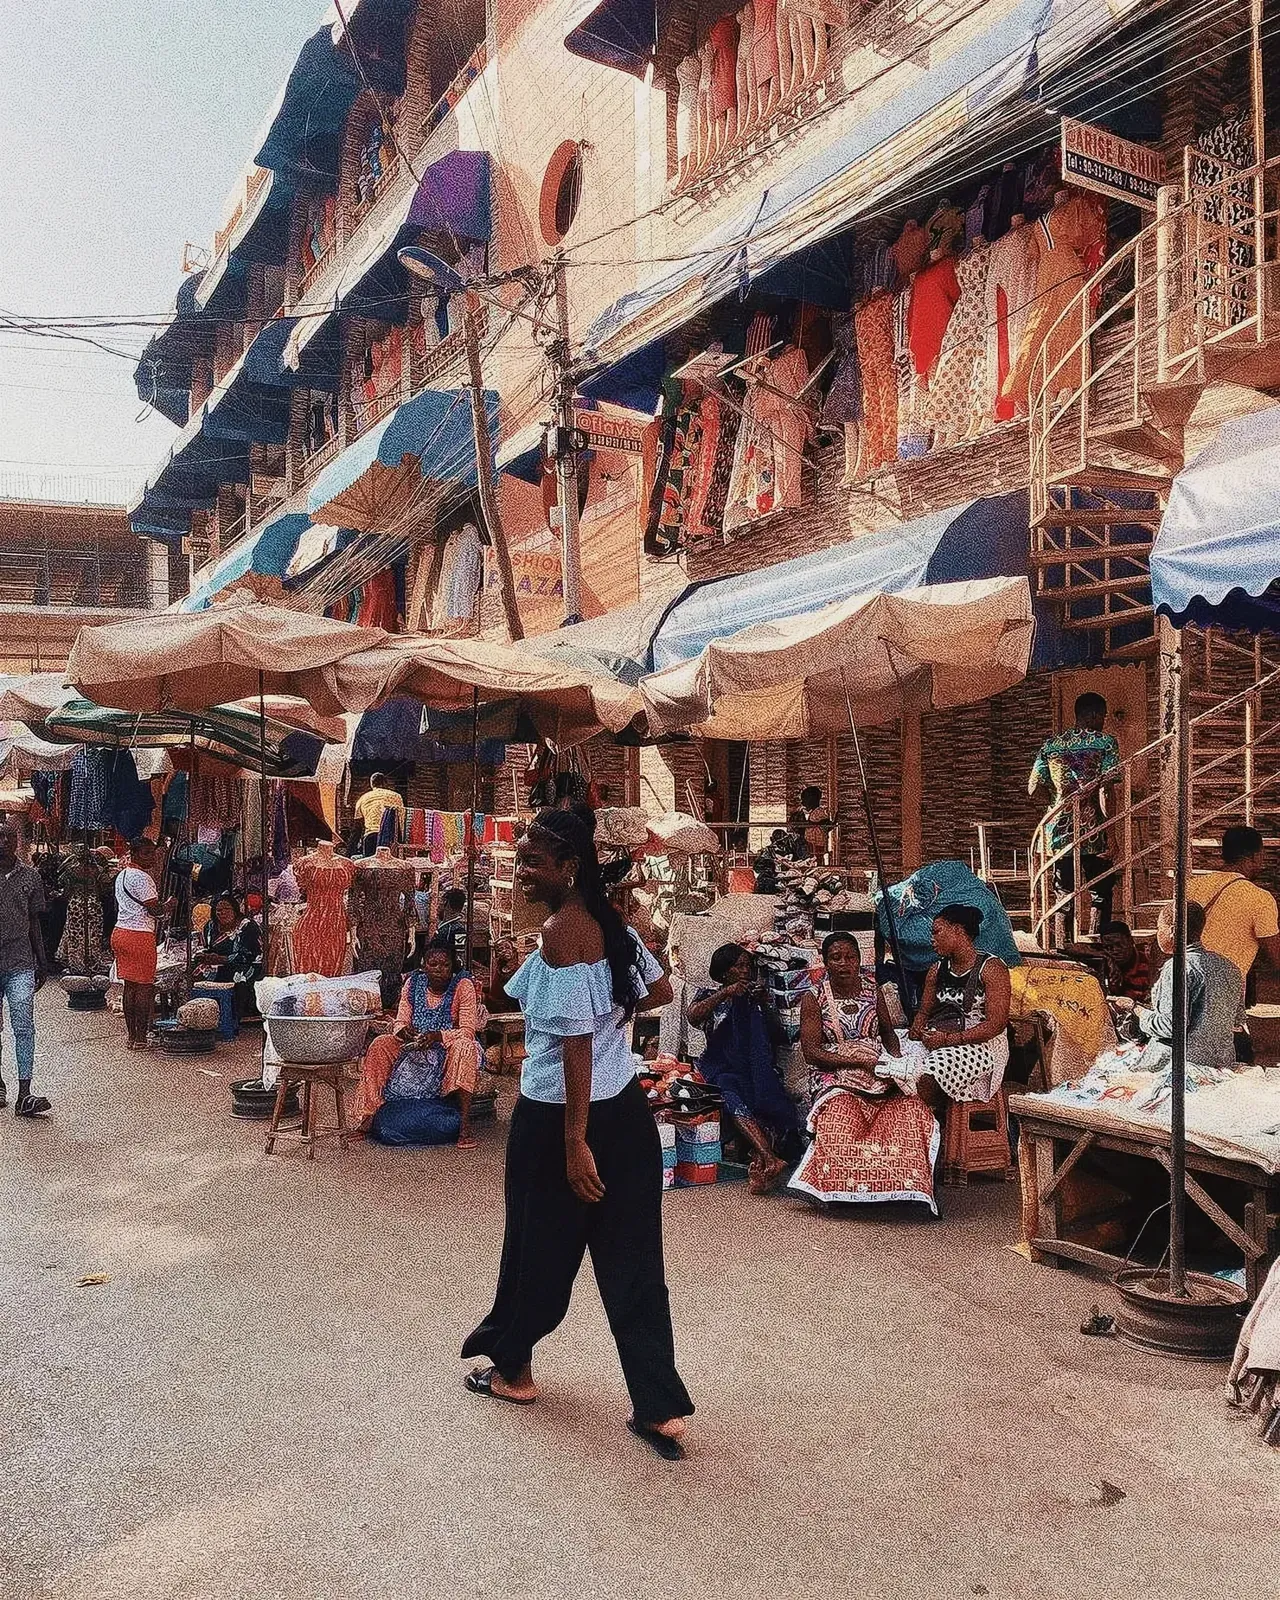 Dynamic urban scene in a bustling marketplace or bazaar